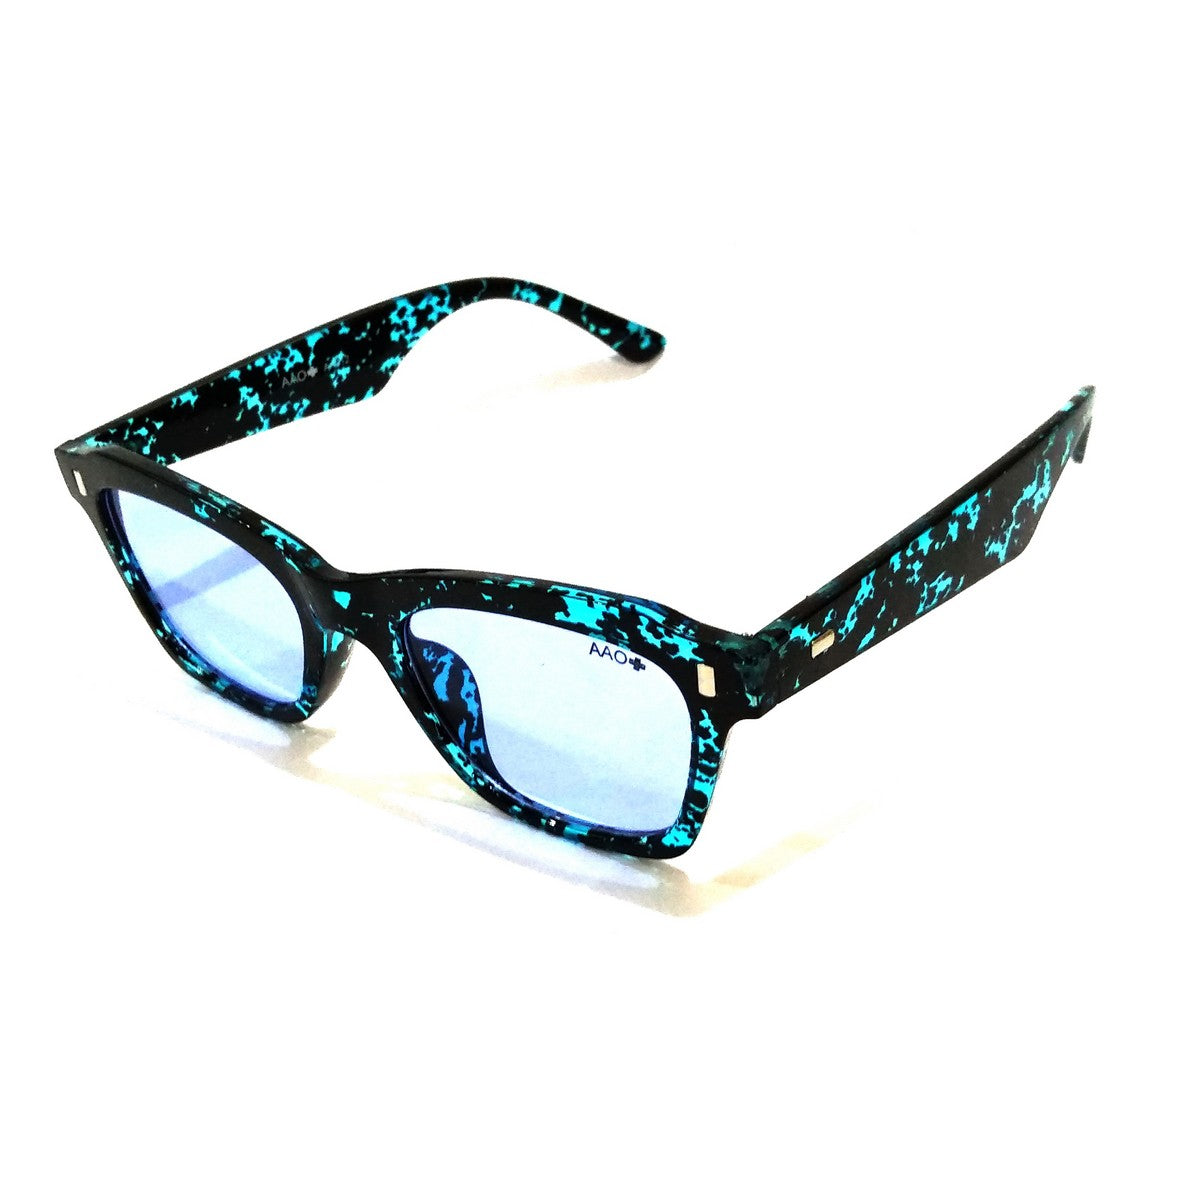 YourSpex - Sunglasses, Eyeglasses, Chasma, Spex, Frame & Contact Lenses